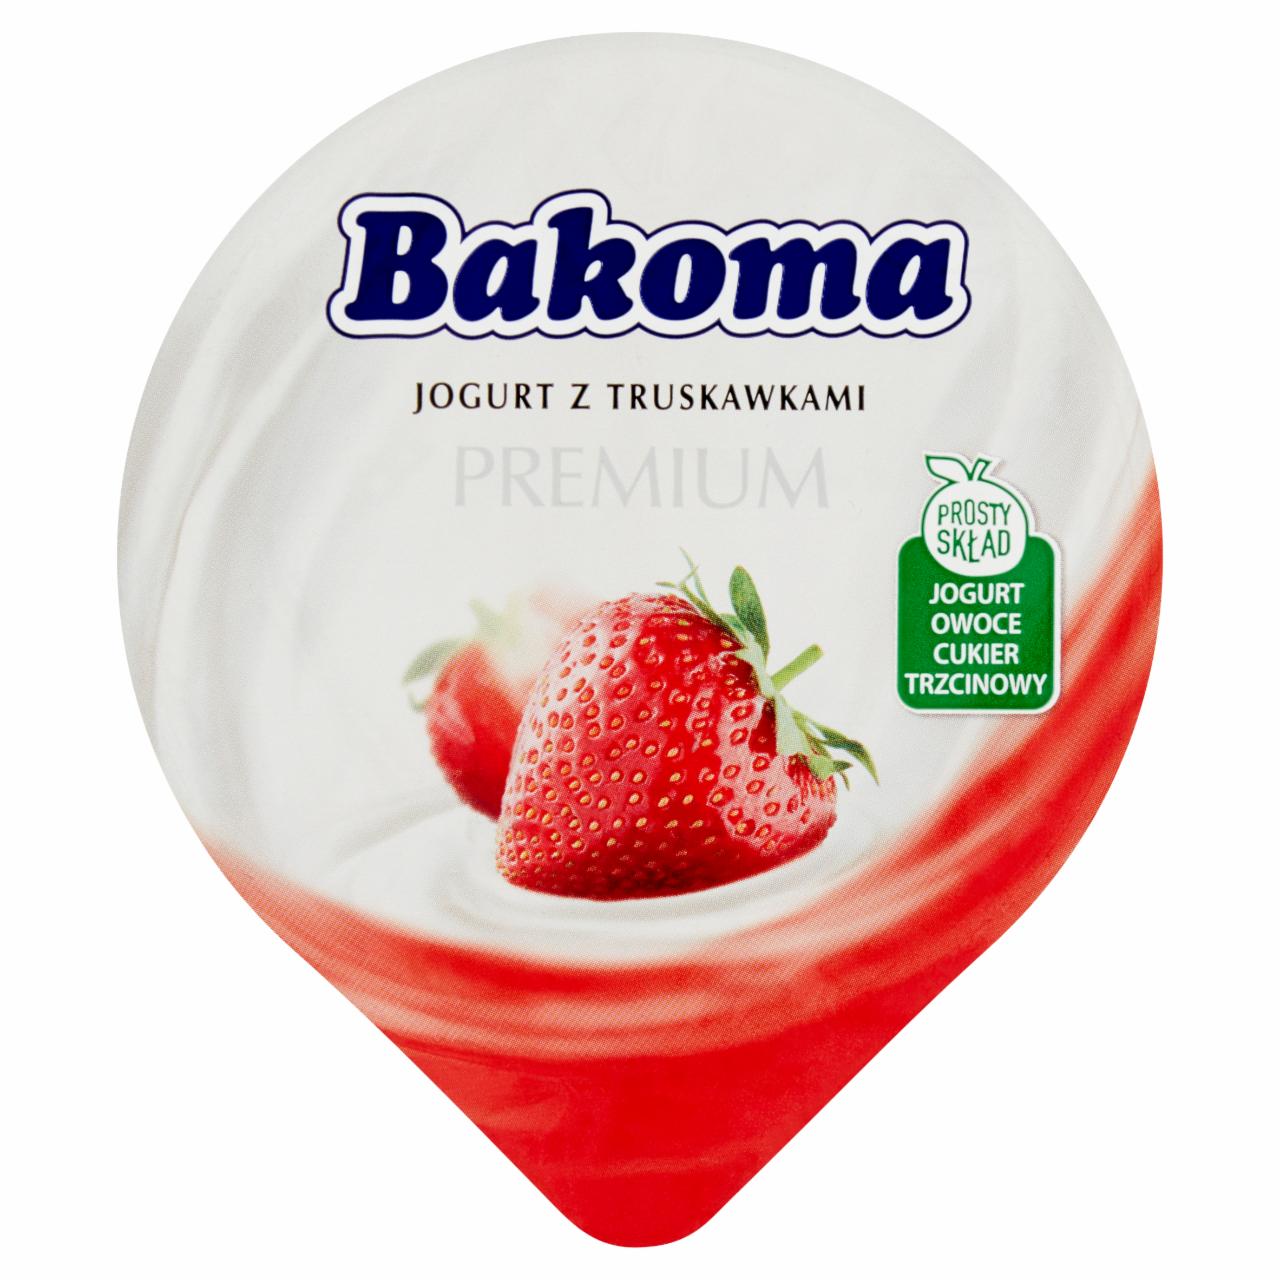 Zdjęcia - Bakoma Premium Jogurt z truskawkami 300 g